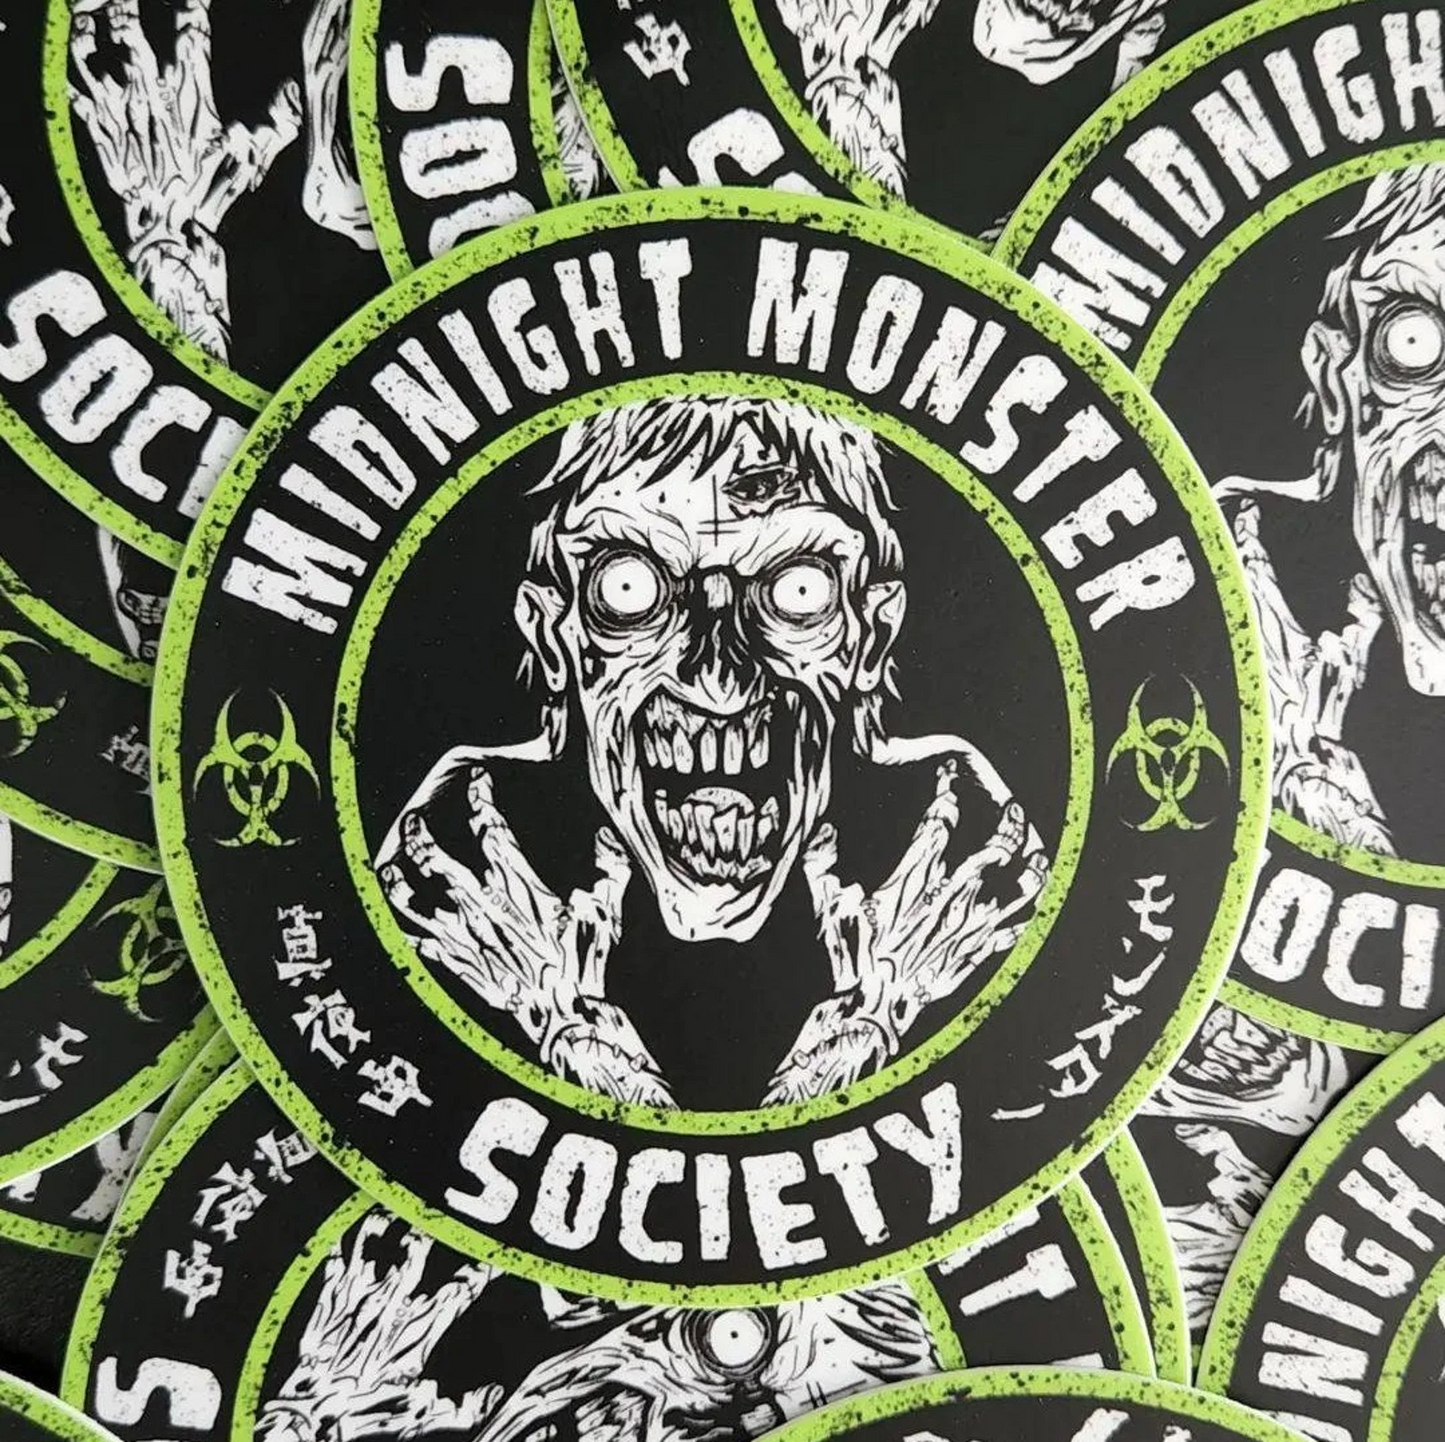 Midnight Monster Society Zombie Fiend Vinyl Sticker